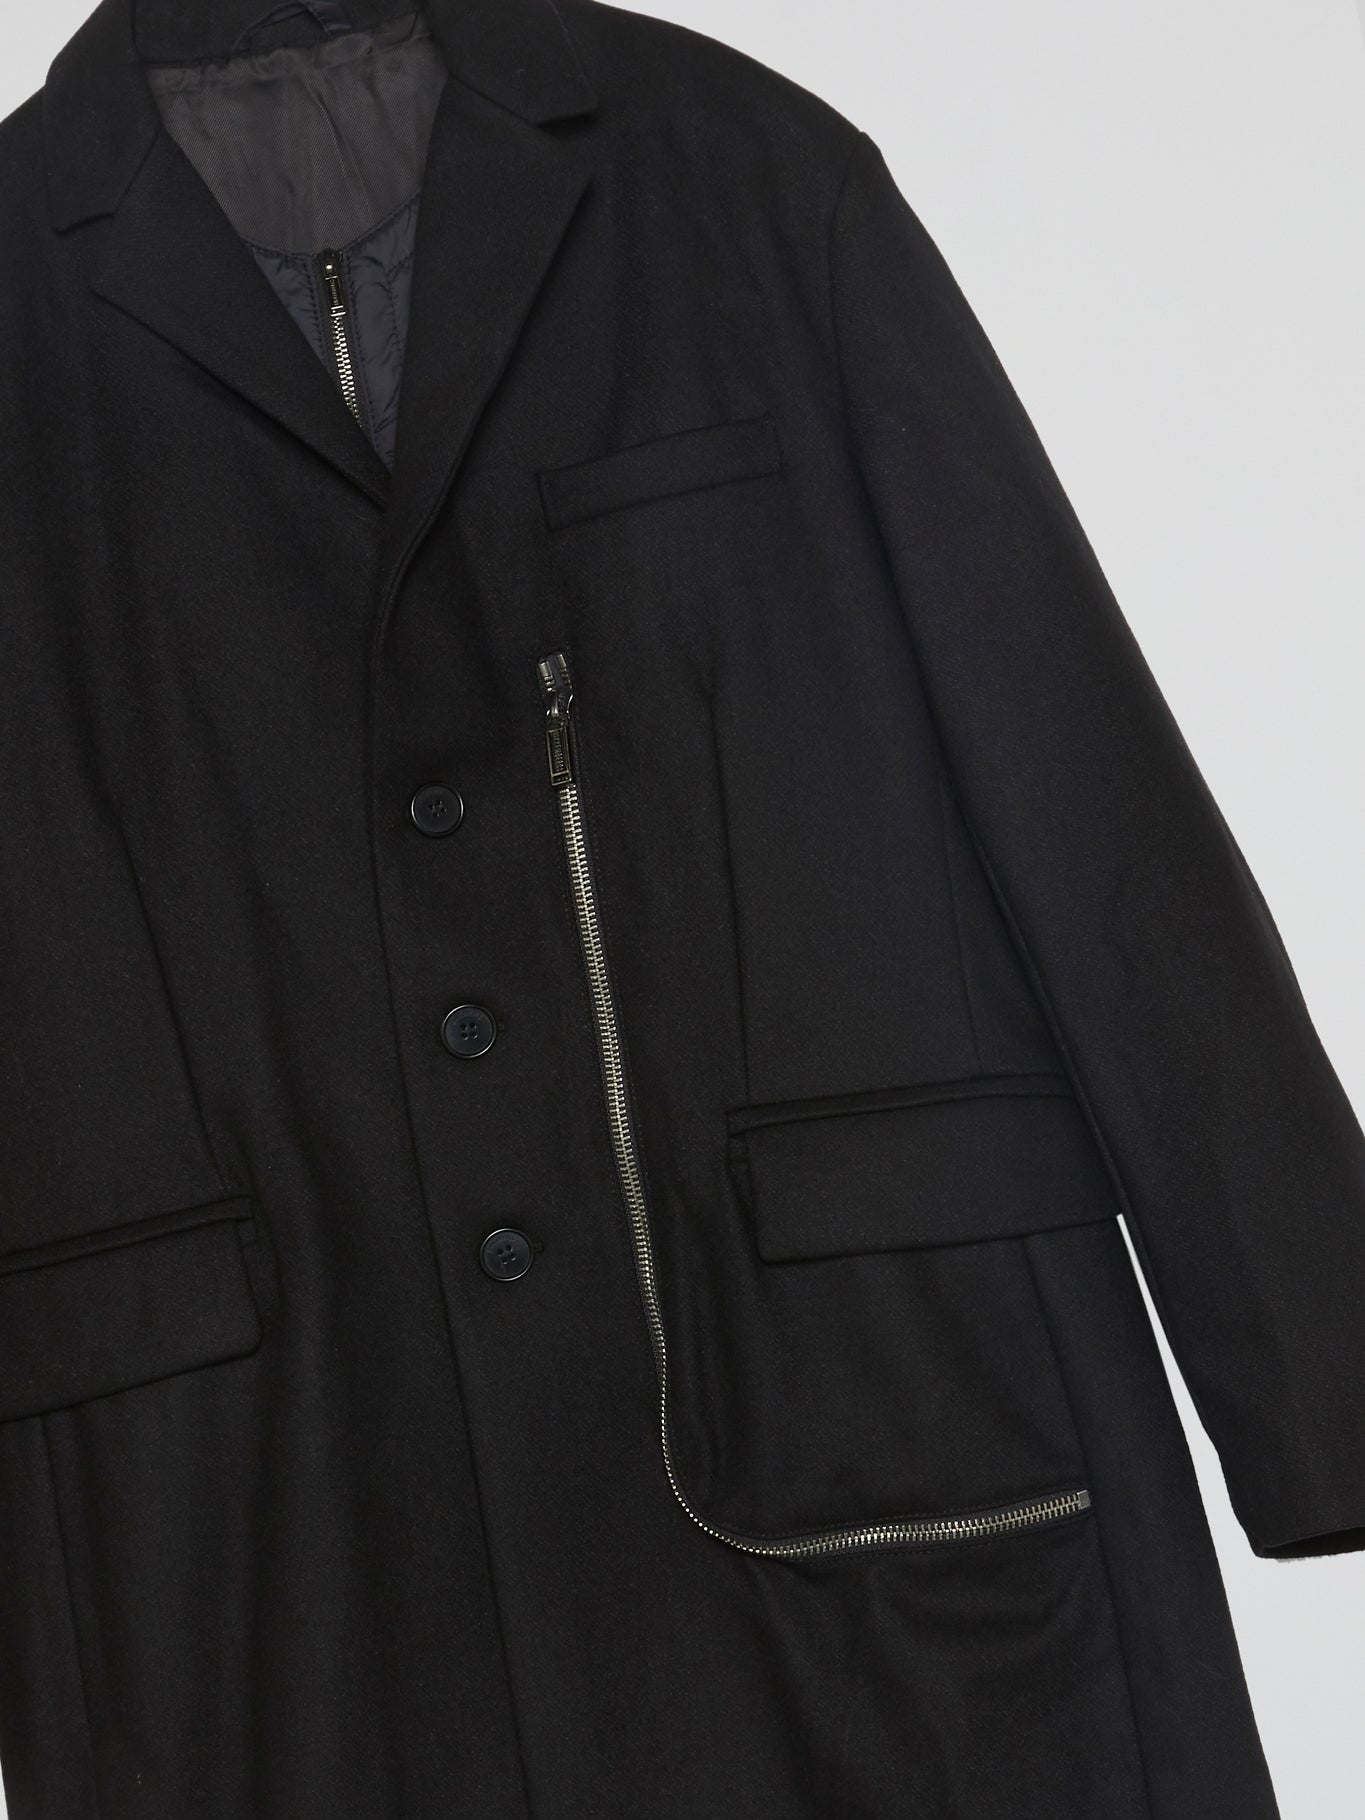 Black Zipper-Detail Trench Coat